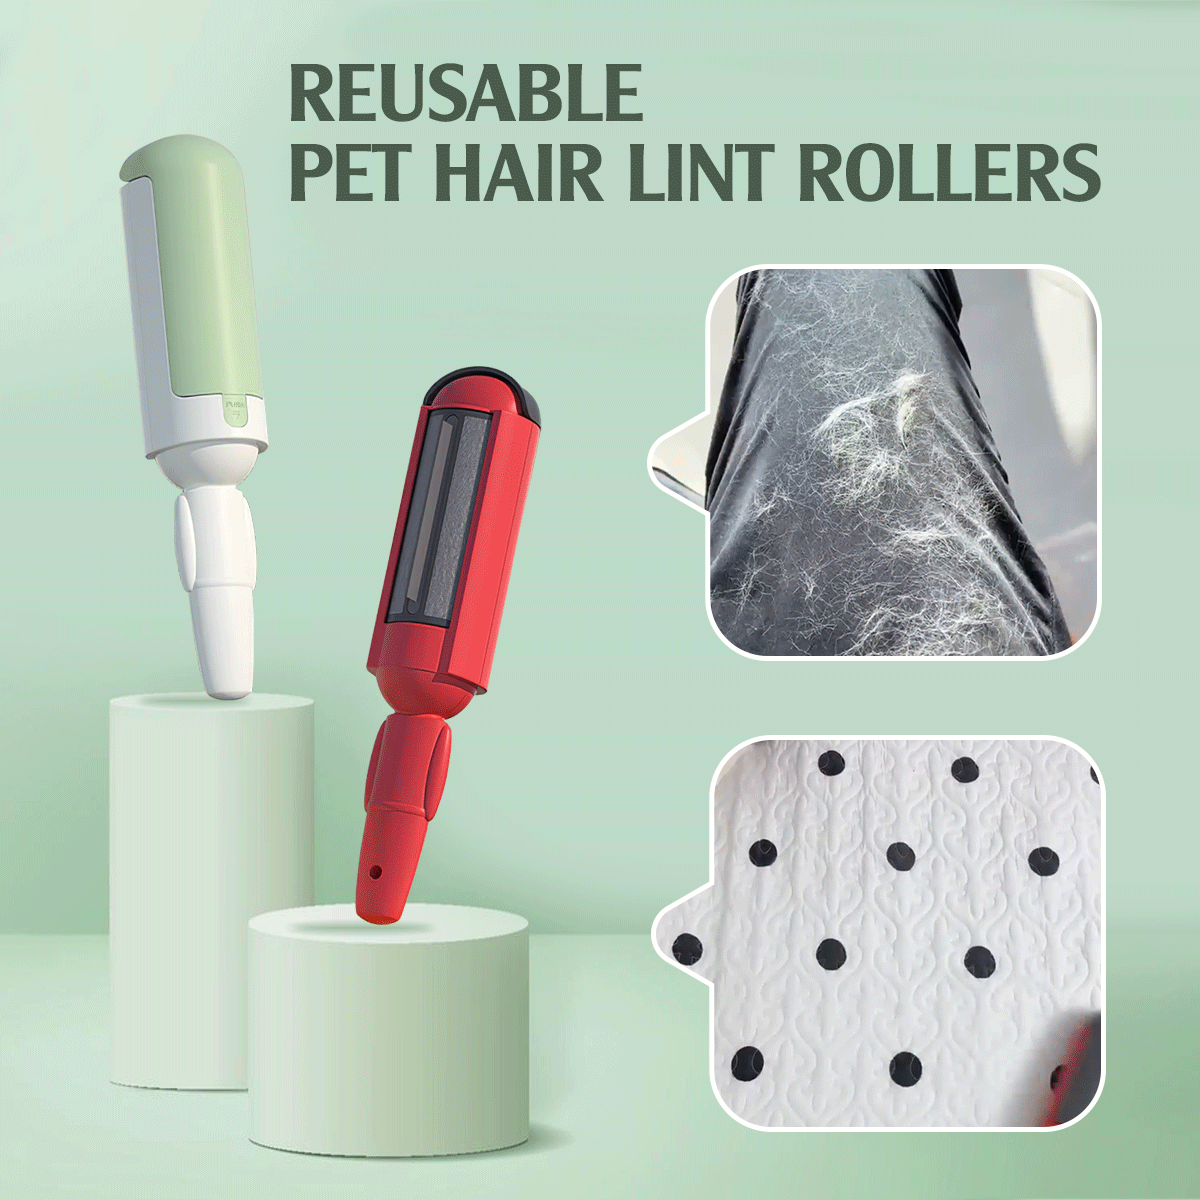 Reusable Pet Hair Lint Rollers - Pets Accessories